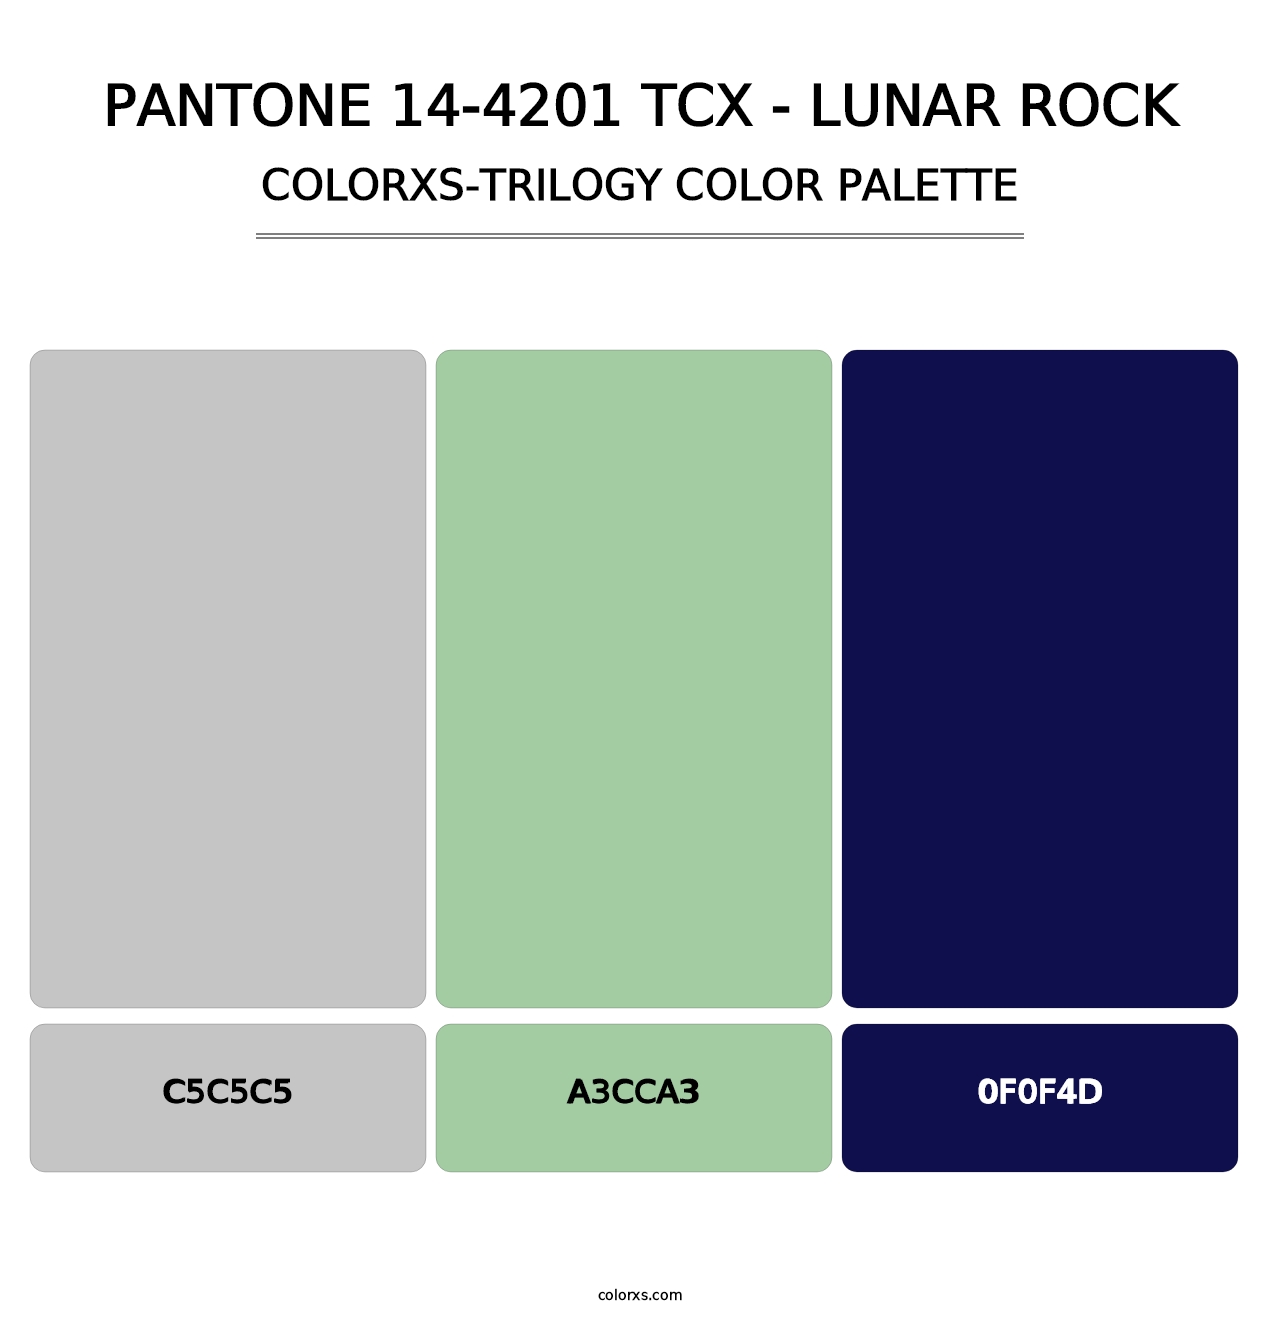 PANTONE 14-4201 TCX - Lunar Rock - Colorxs Trilogy Palette